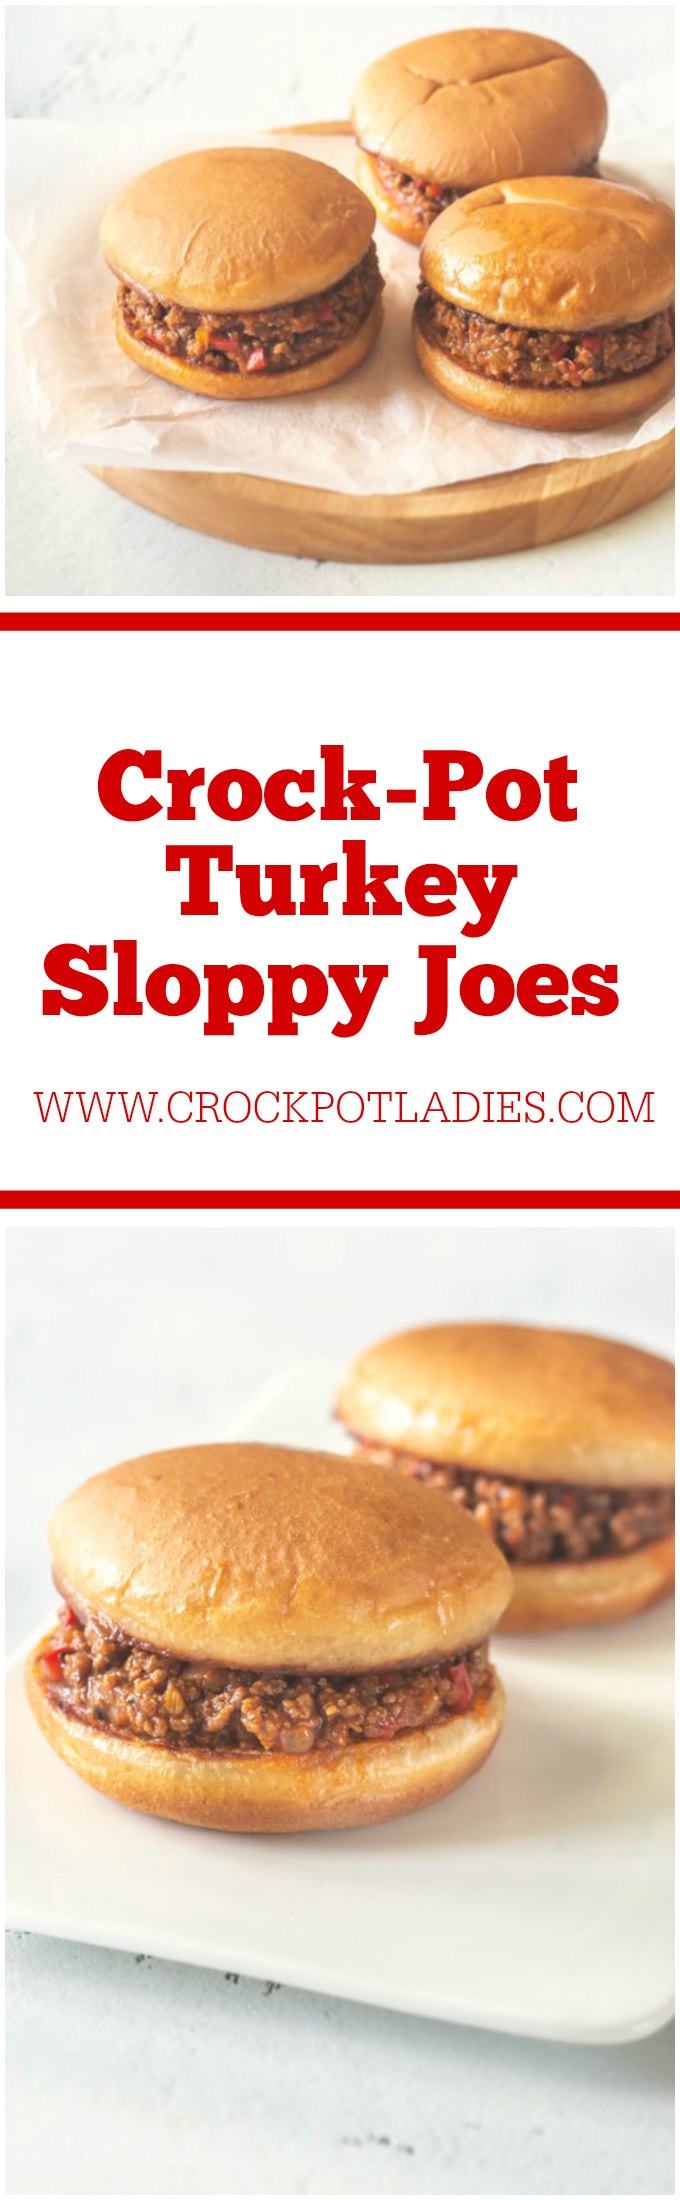 Crock-Pot Turkey Sloppy Joes